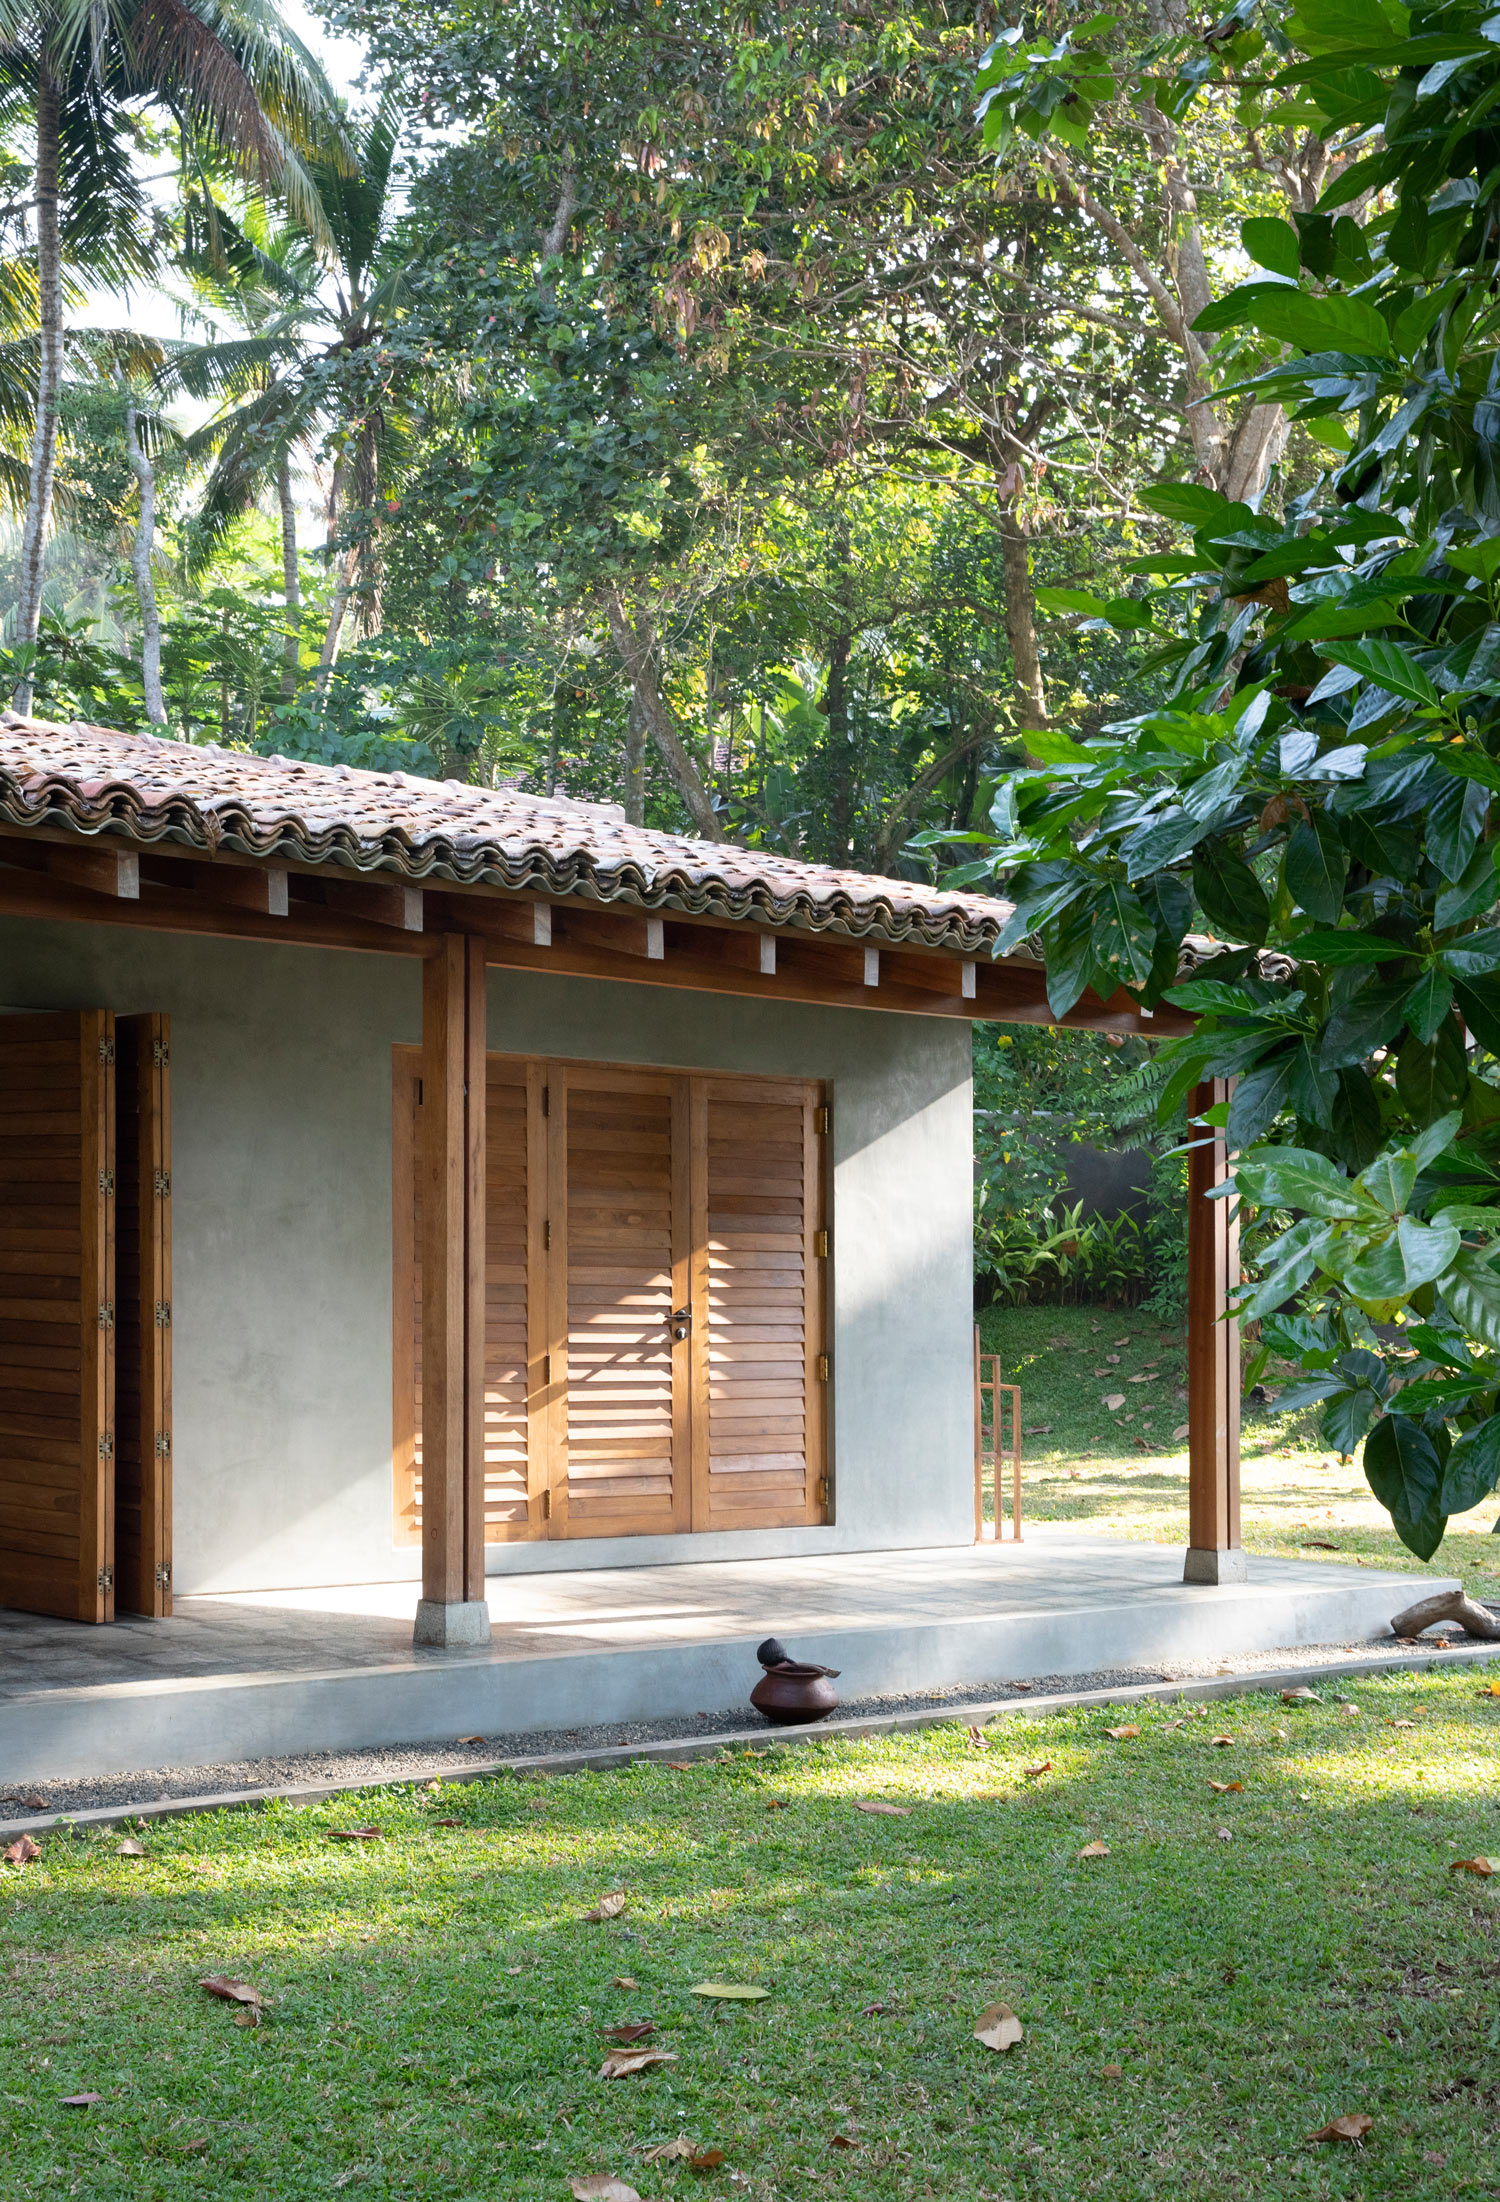 Enjoy Raw Luxury Design And Slow Holidays In This Airbnb In Sri Lanka - Concrete, teak wood, terrazzo materials - www.AUTHENTICINTERIOR.COM design studio & blog